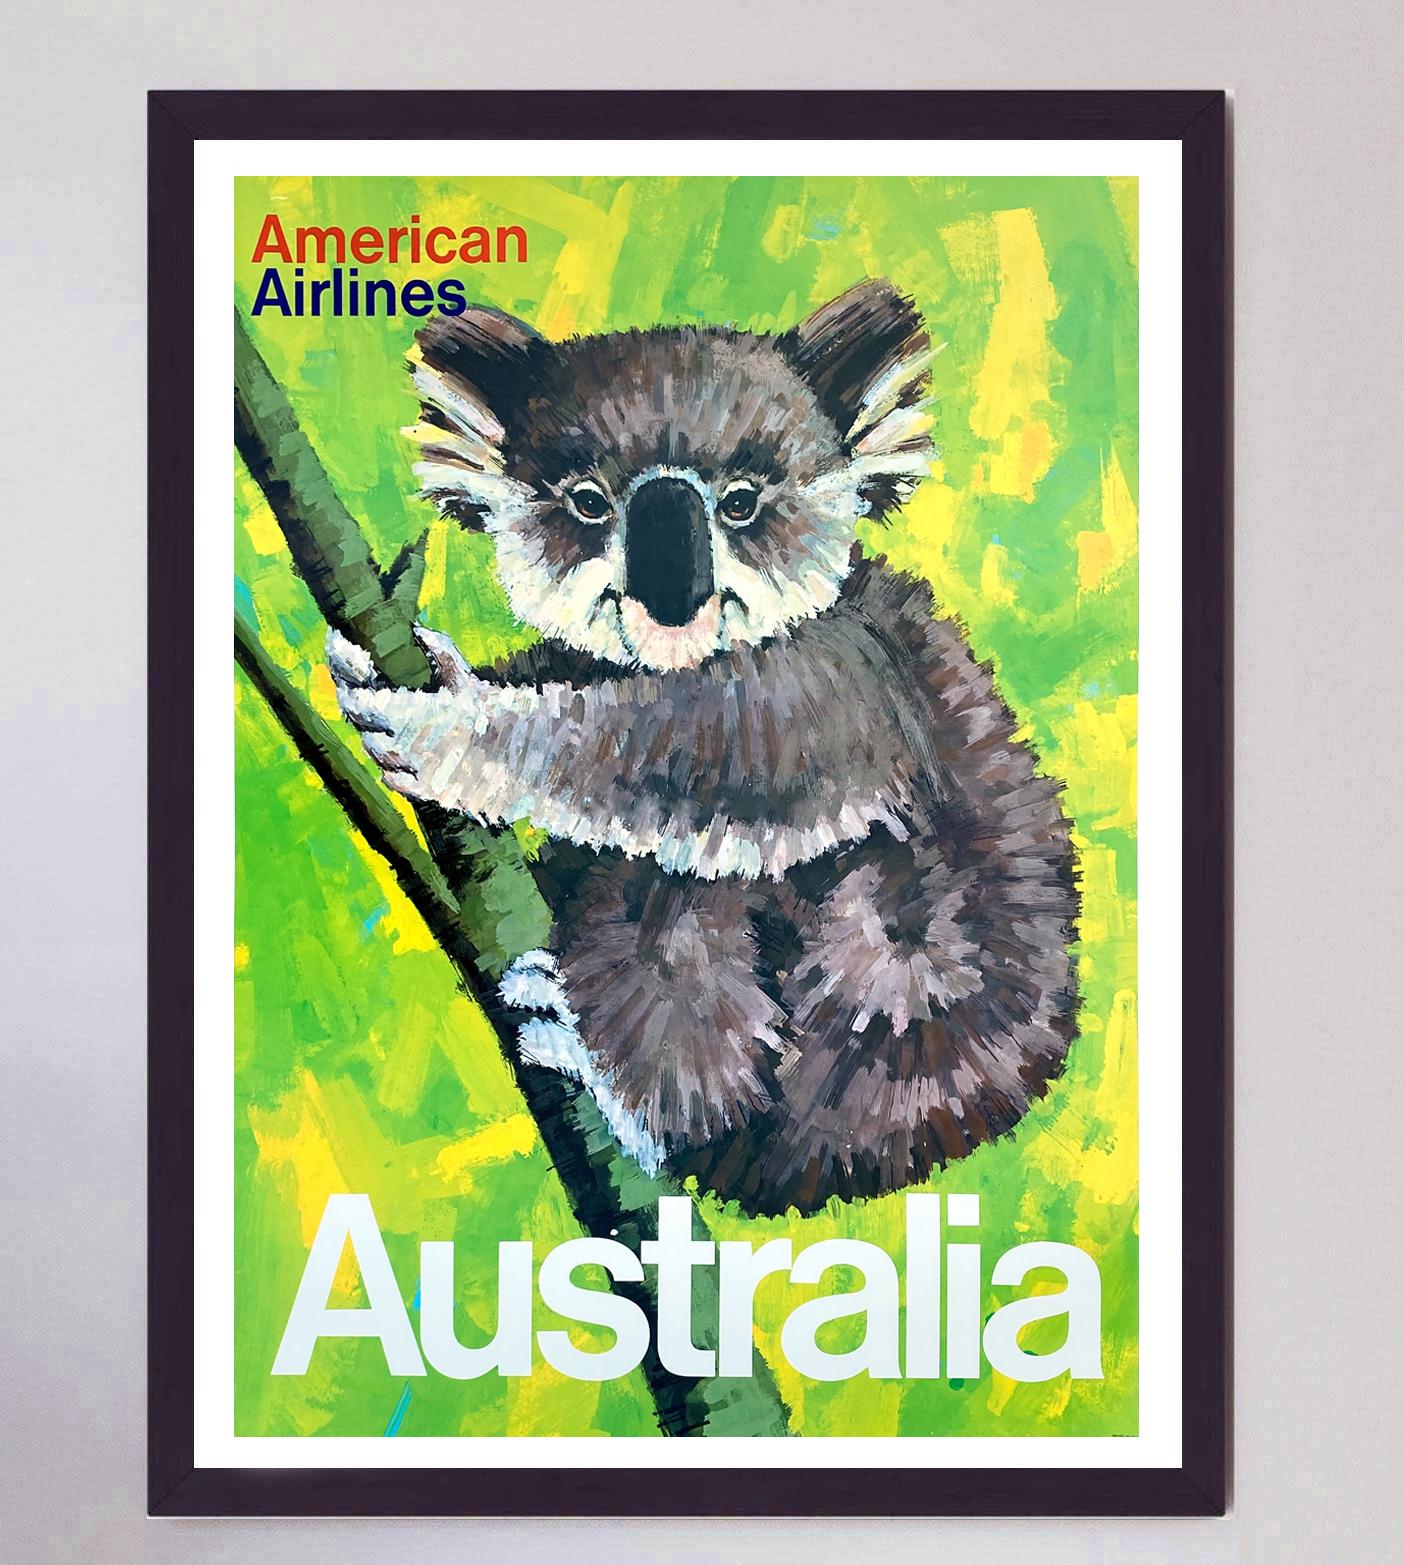 Paper 1965 American Airlines - Australia Original Vintage Poster For Sale